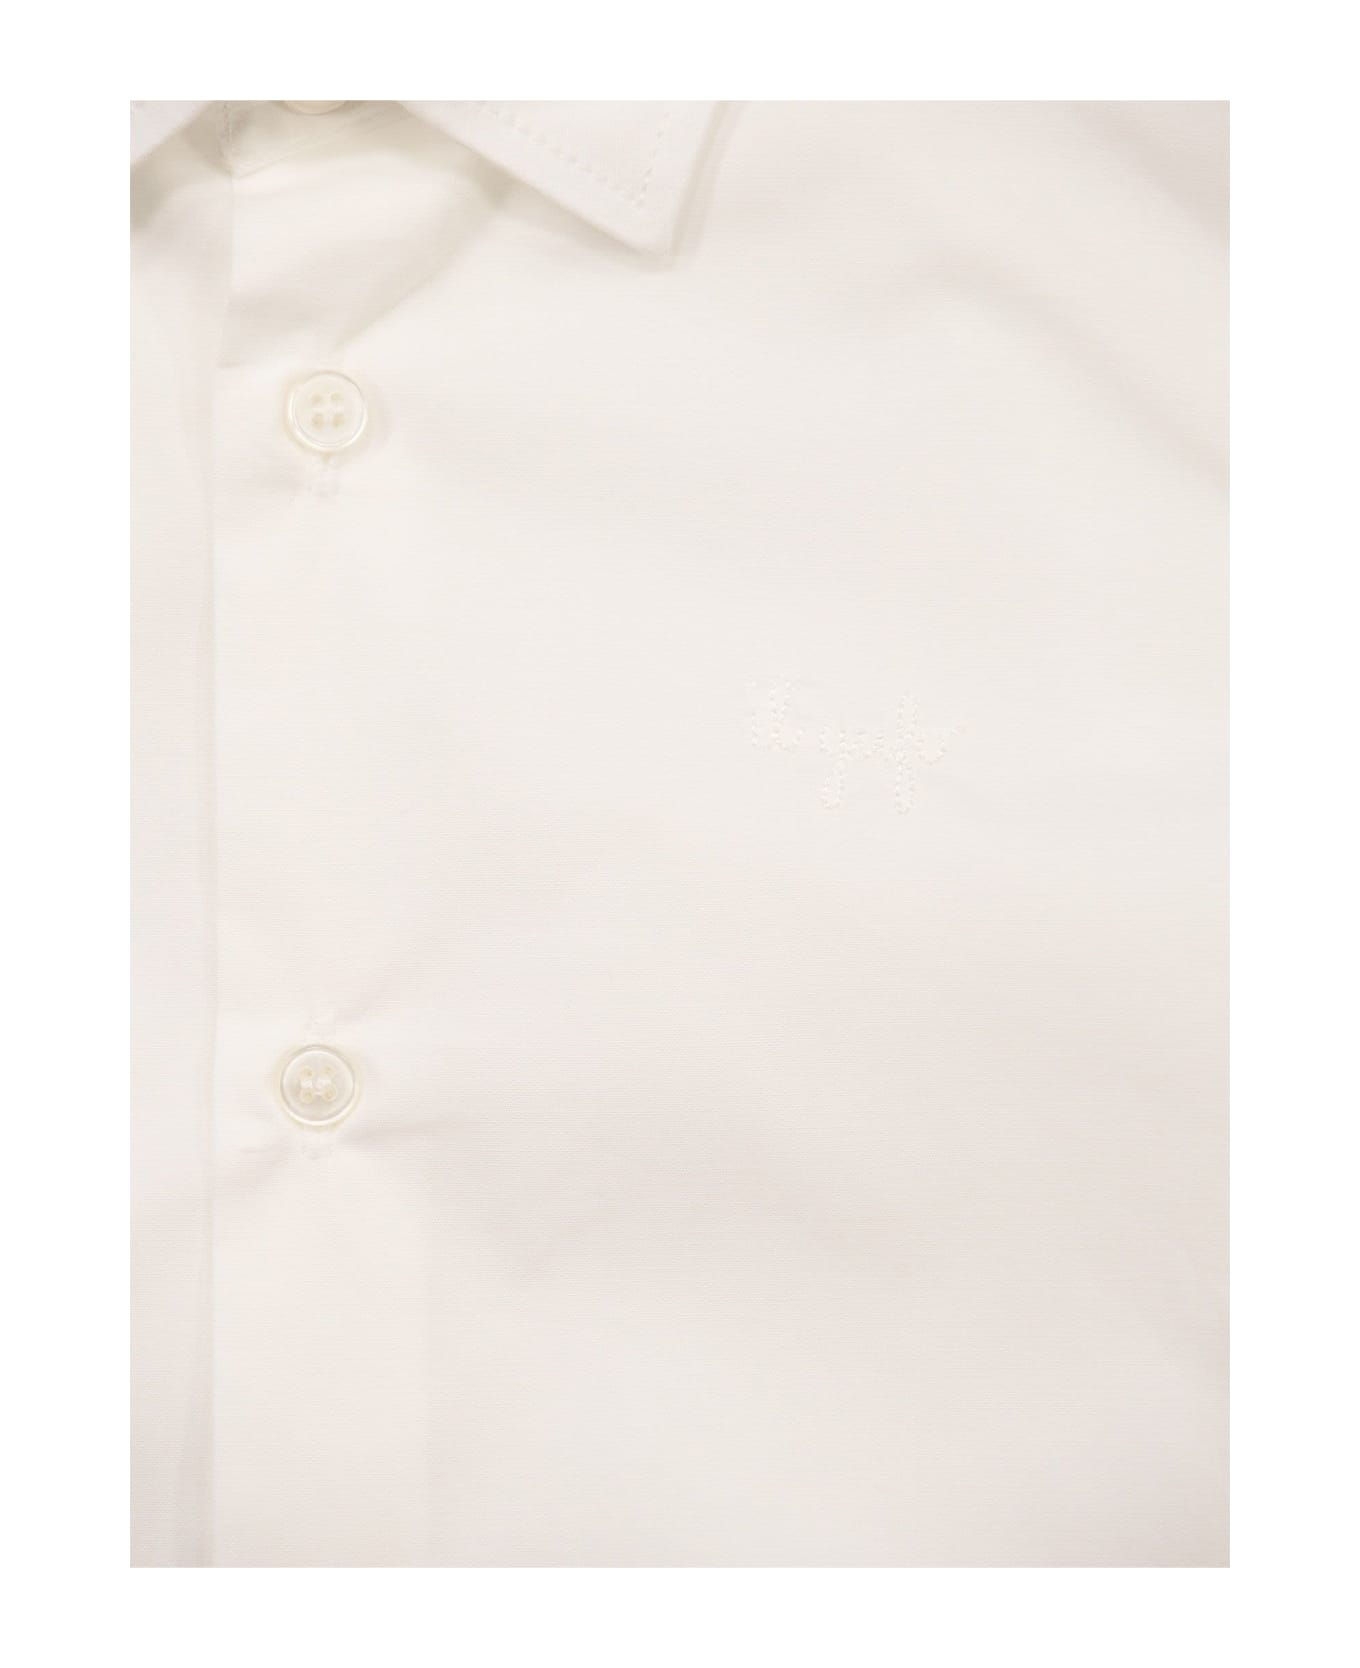 Il Gufo Long-sleeved Cotton Shirt - White